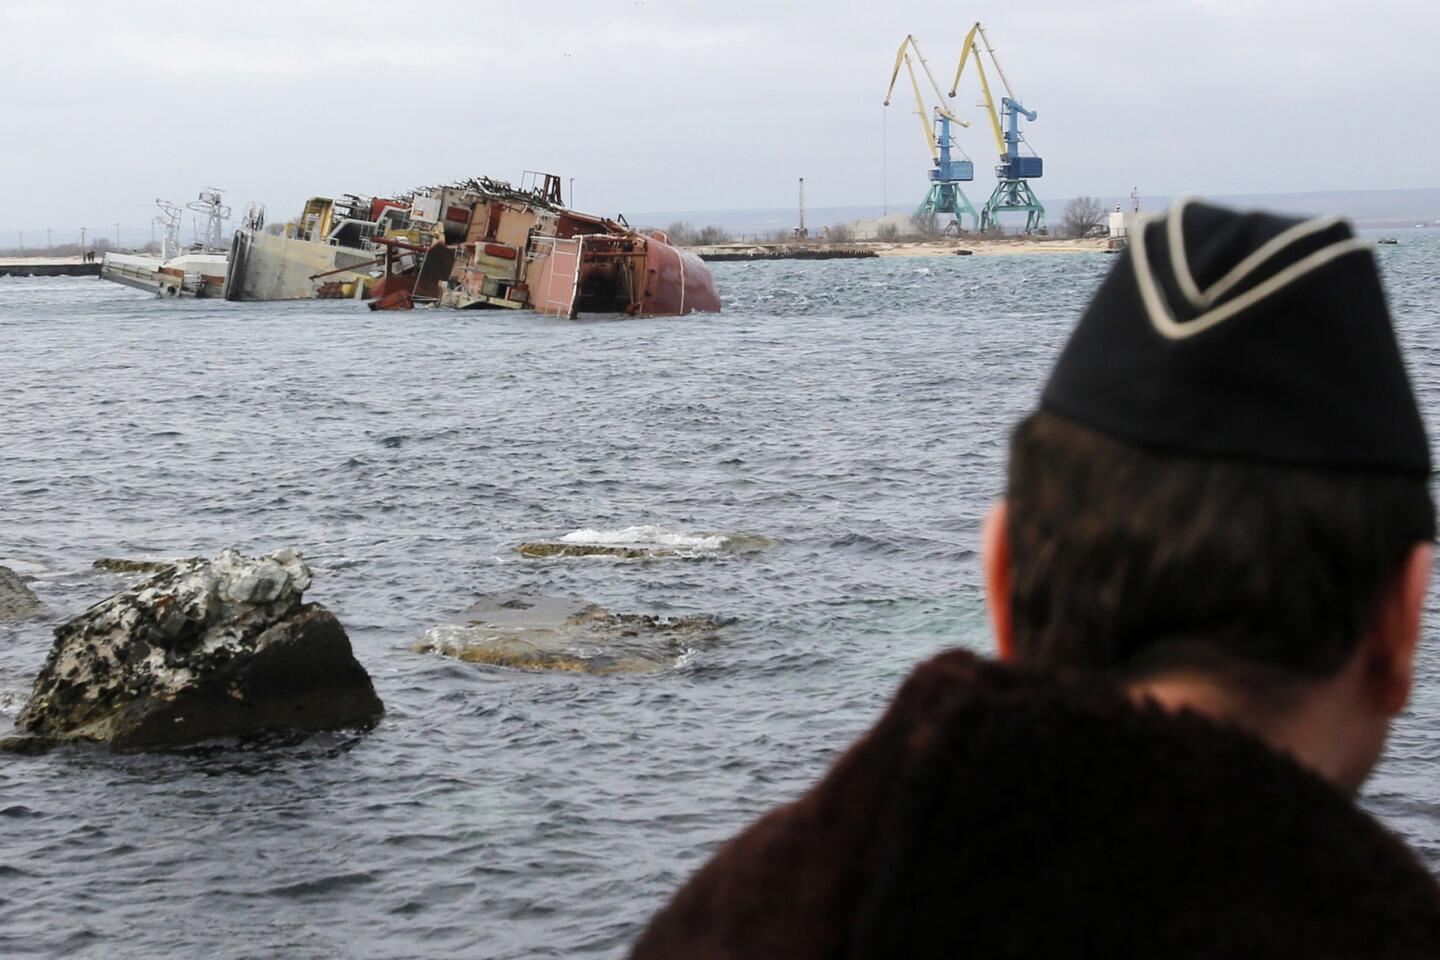 Ukraine vessels blocked